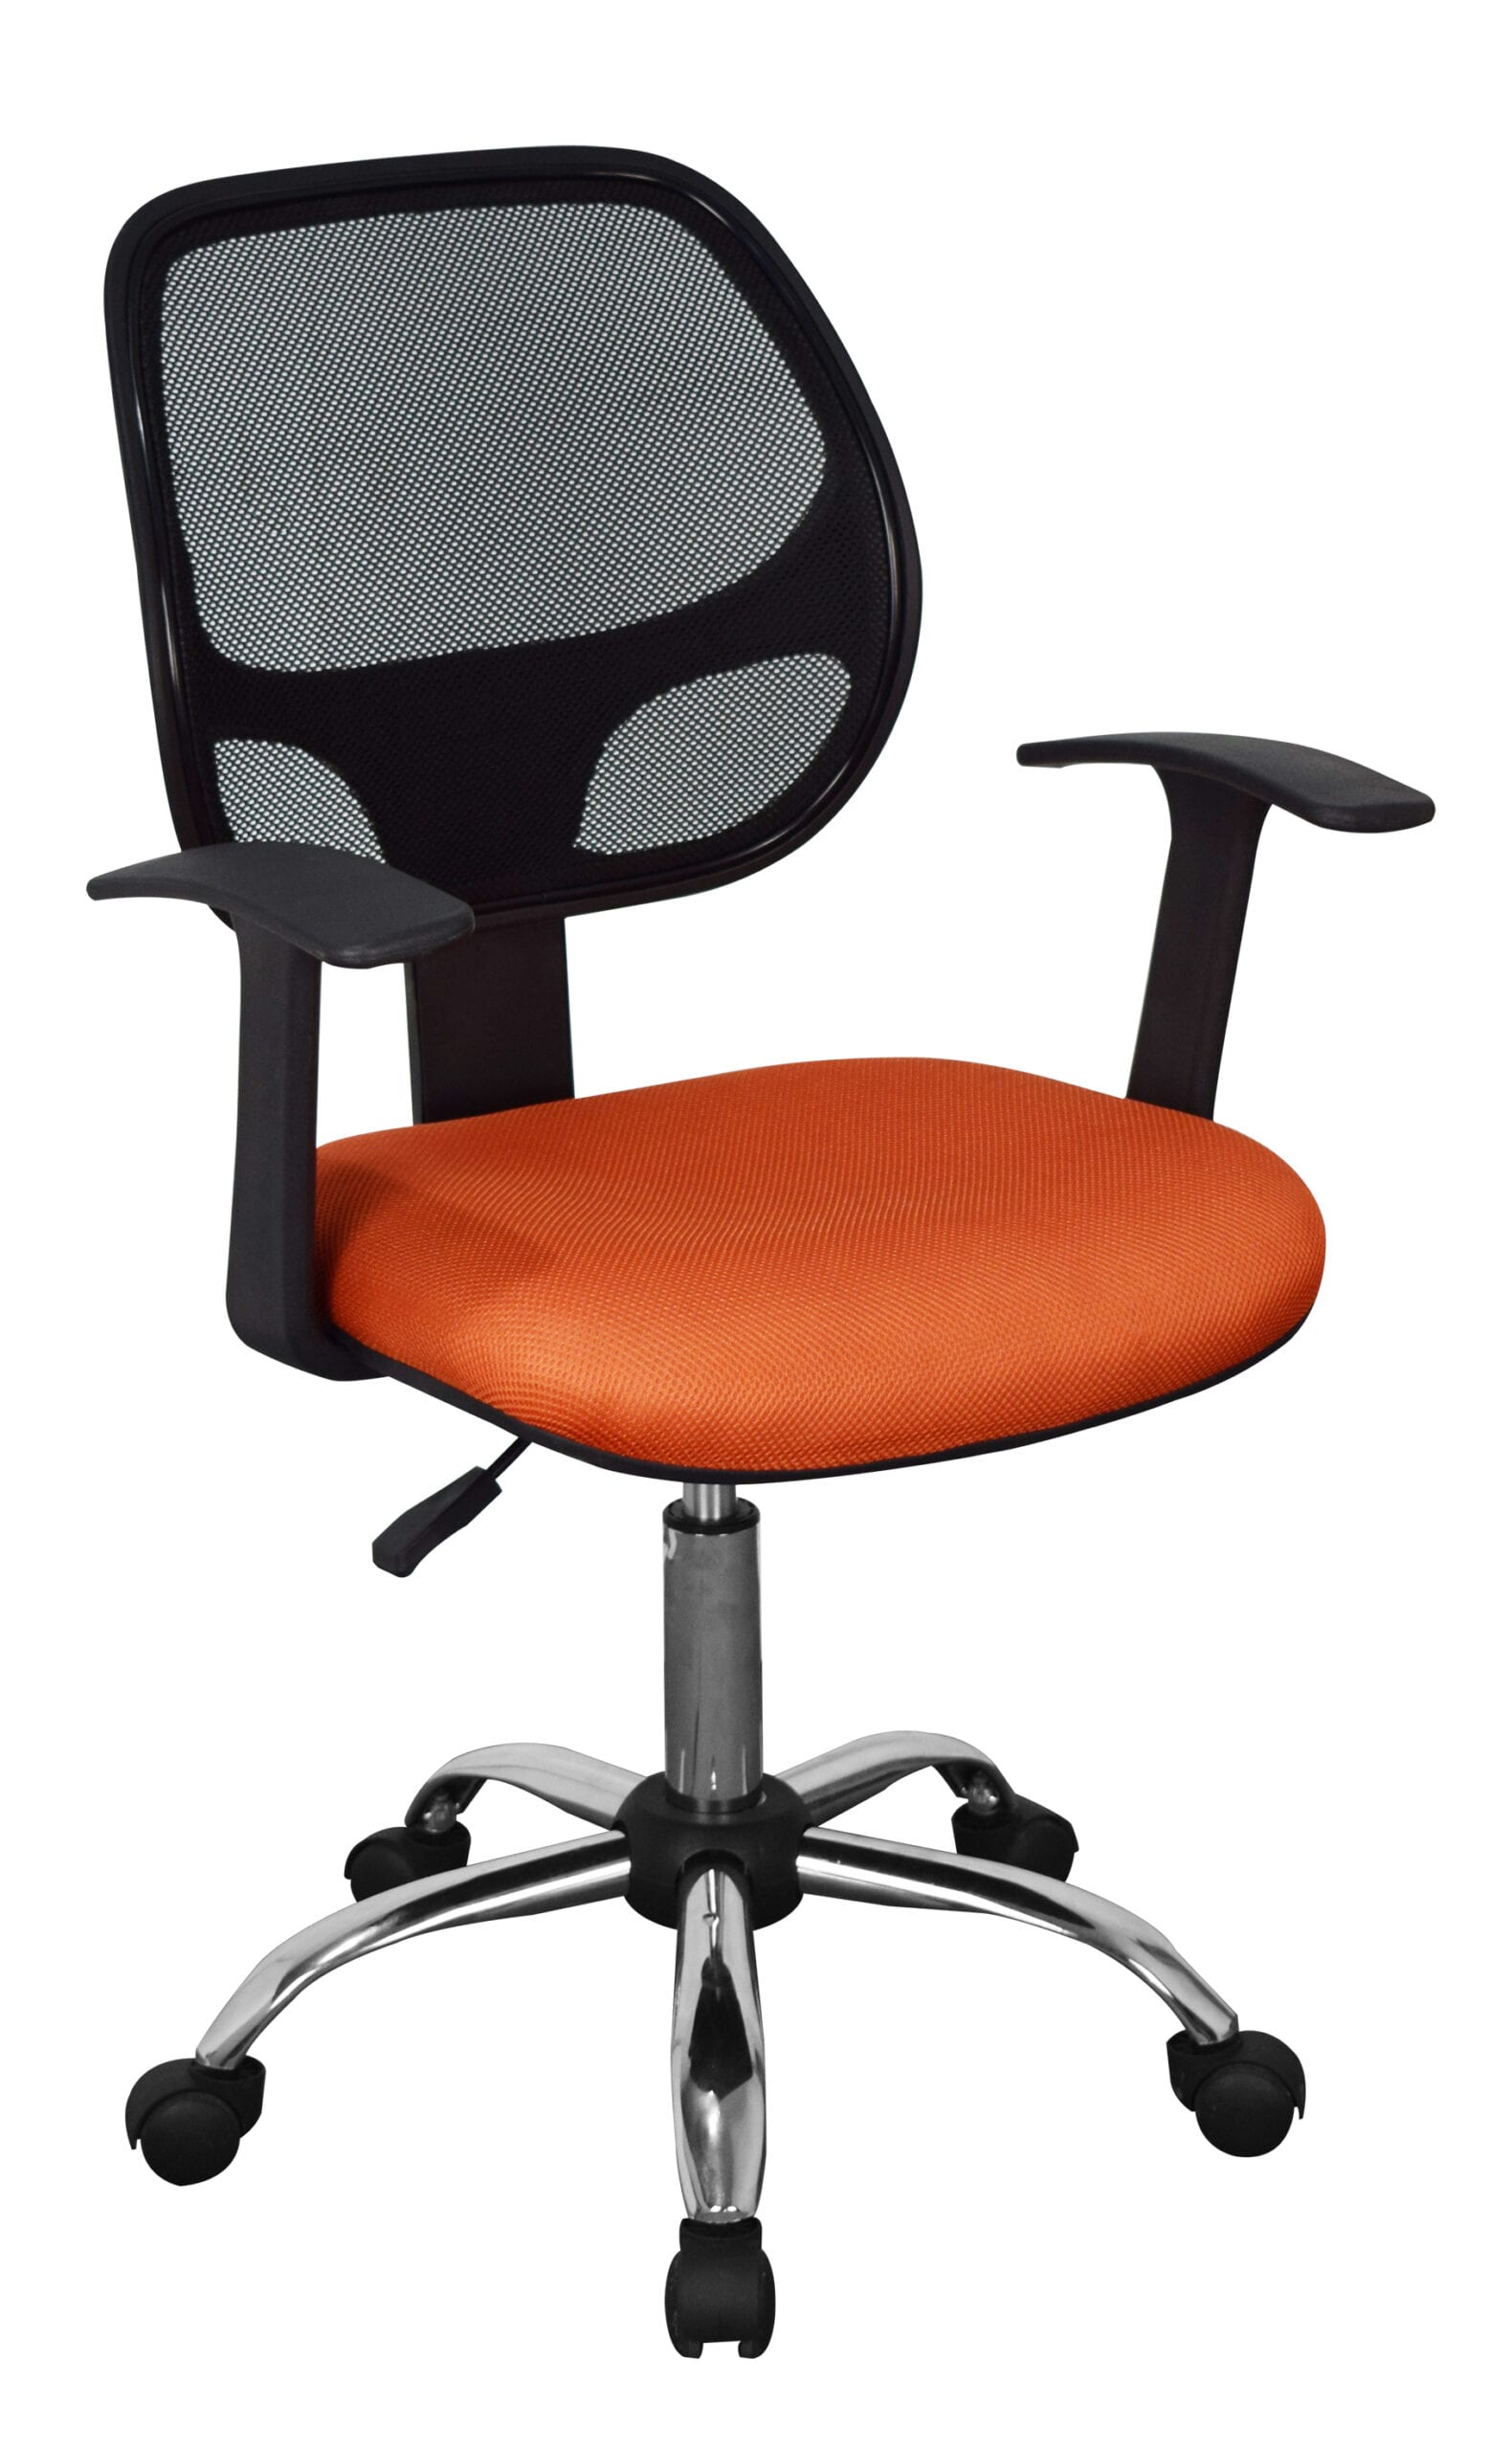 Lust home office chair in black mesh orange fabric chrome base